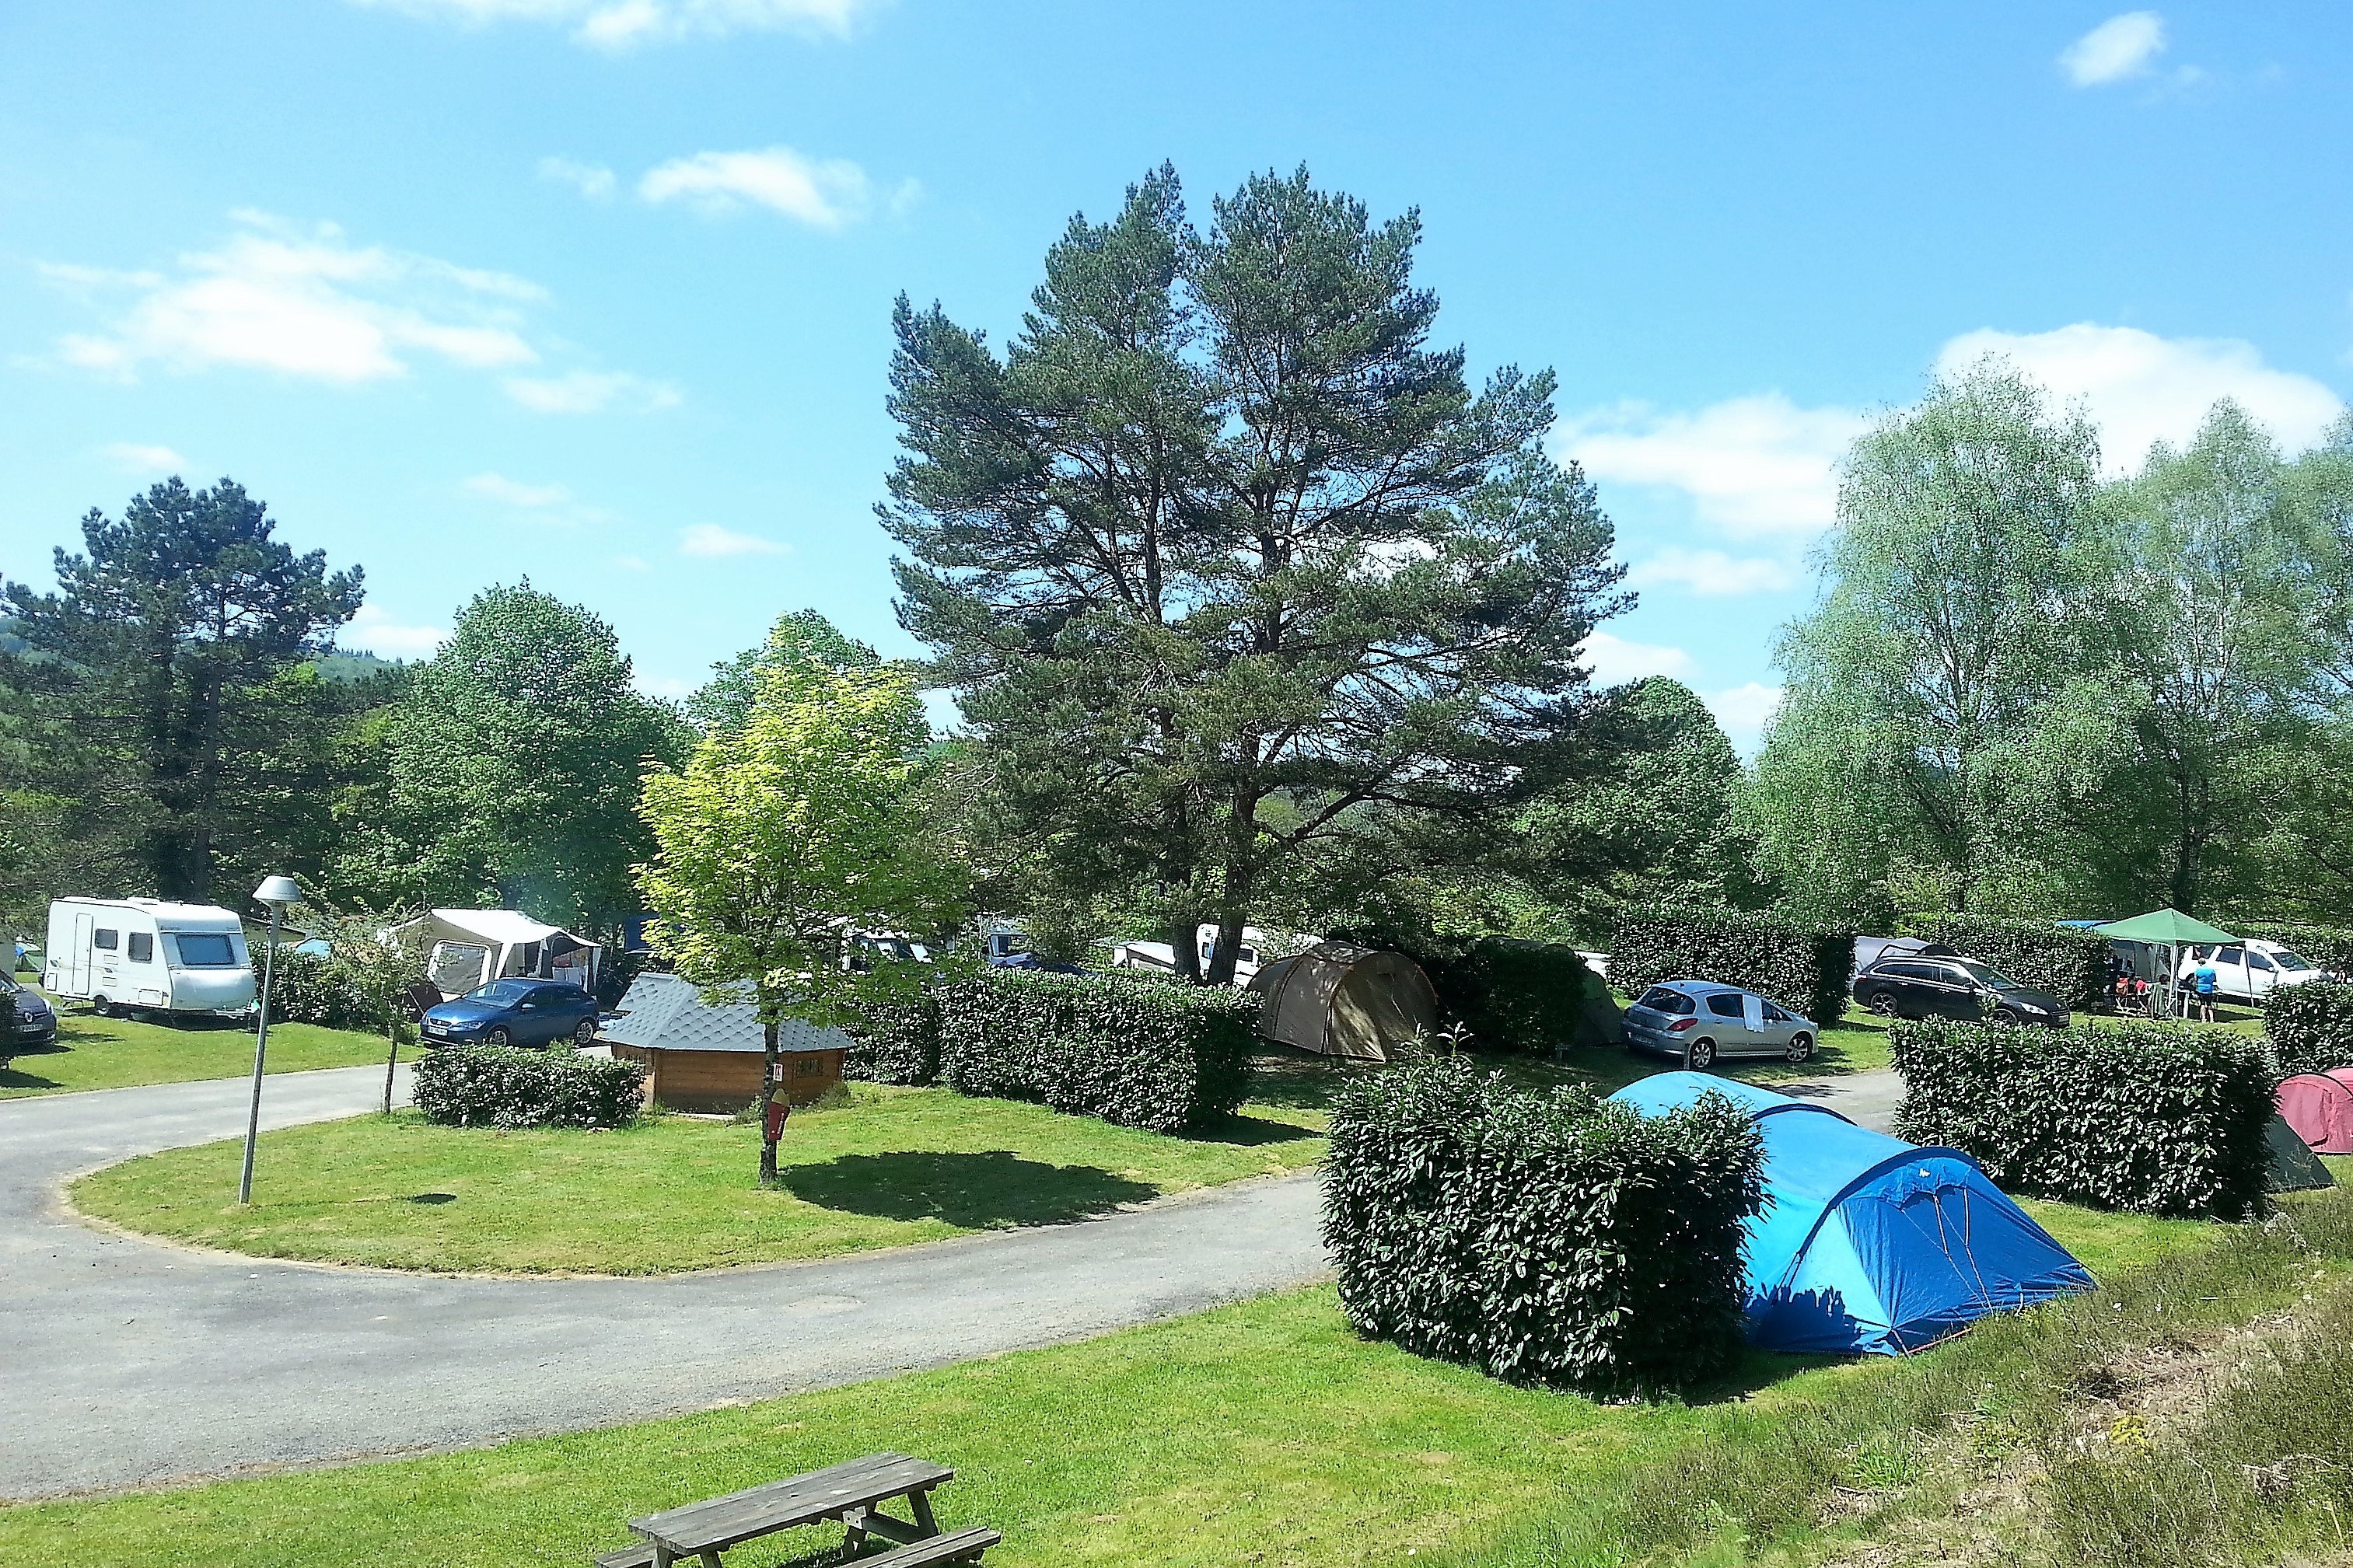 Camping nature Nouvelle Aquitaine - Camping L'écrin Nature